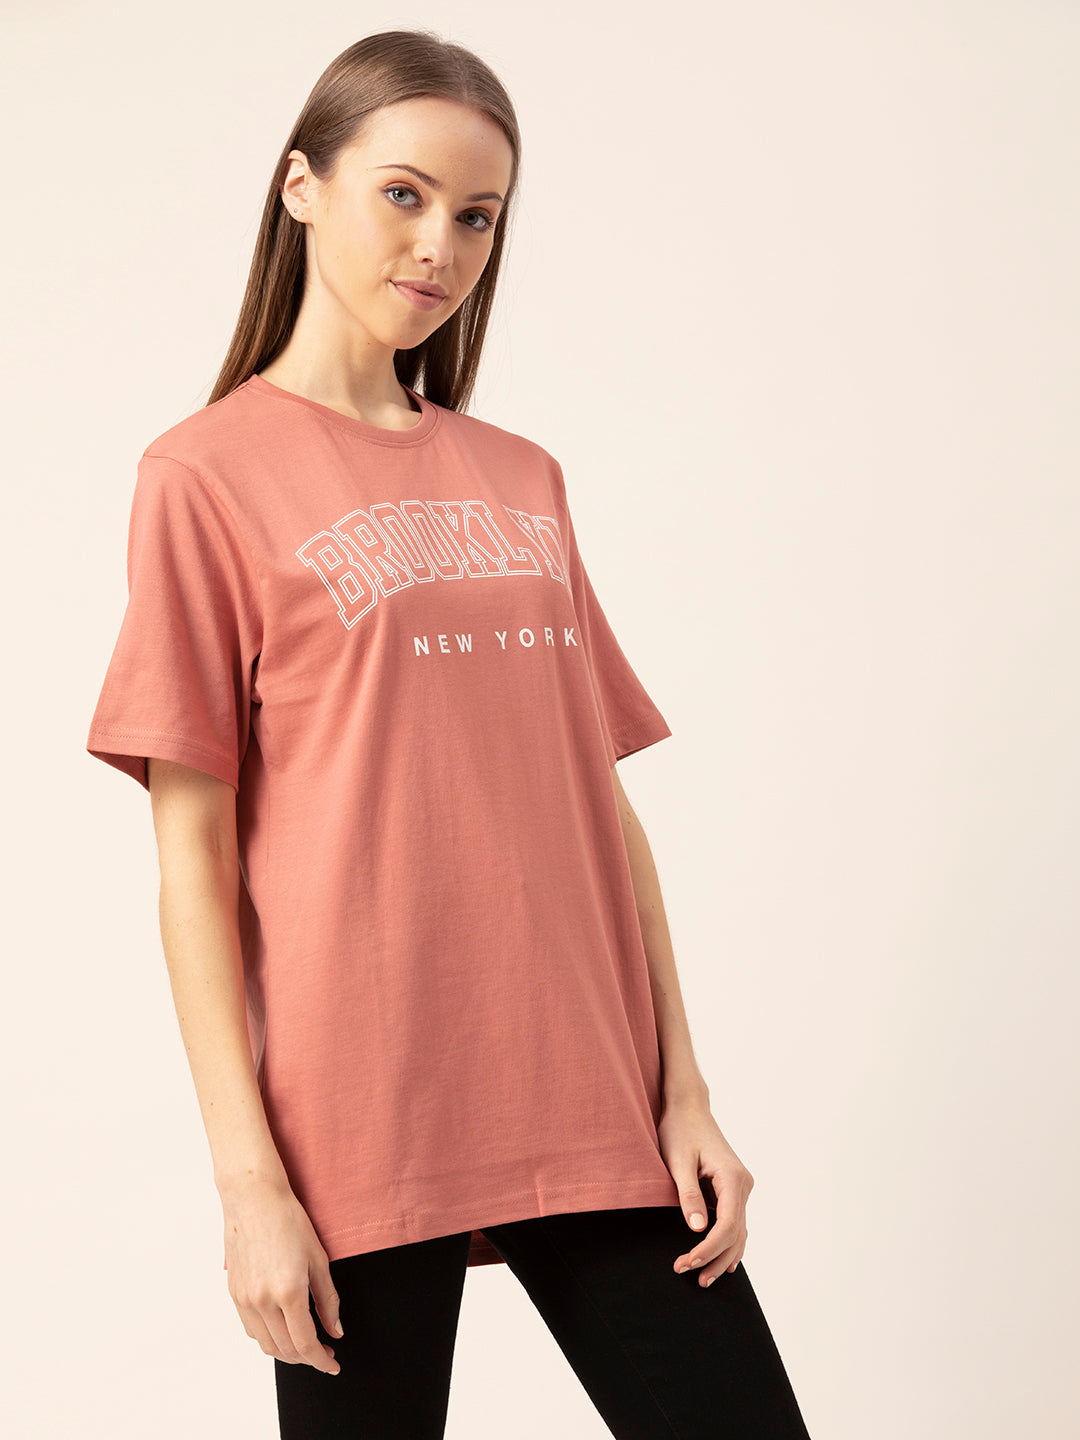 Brooklyn Women's Oversized T-Shirt